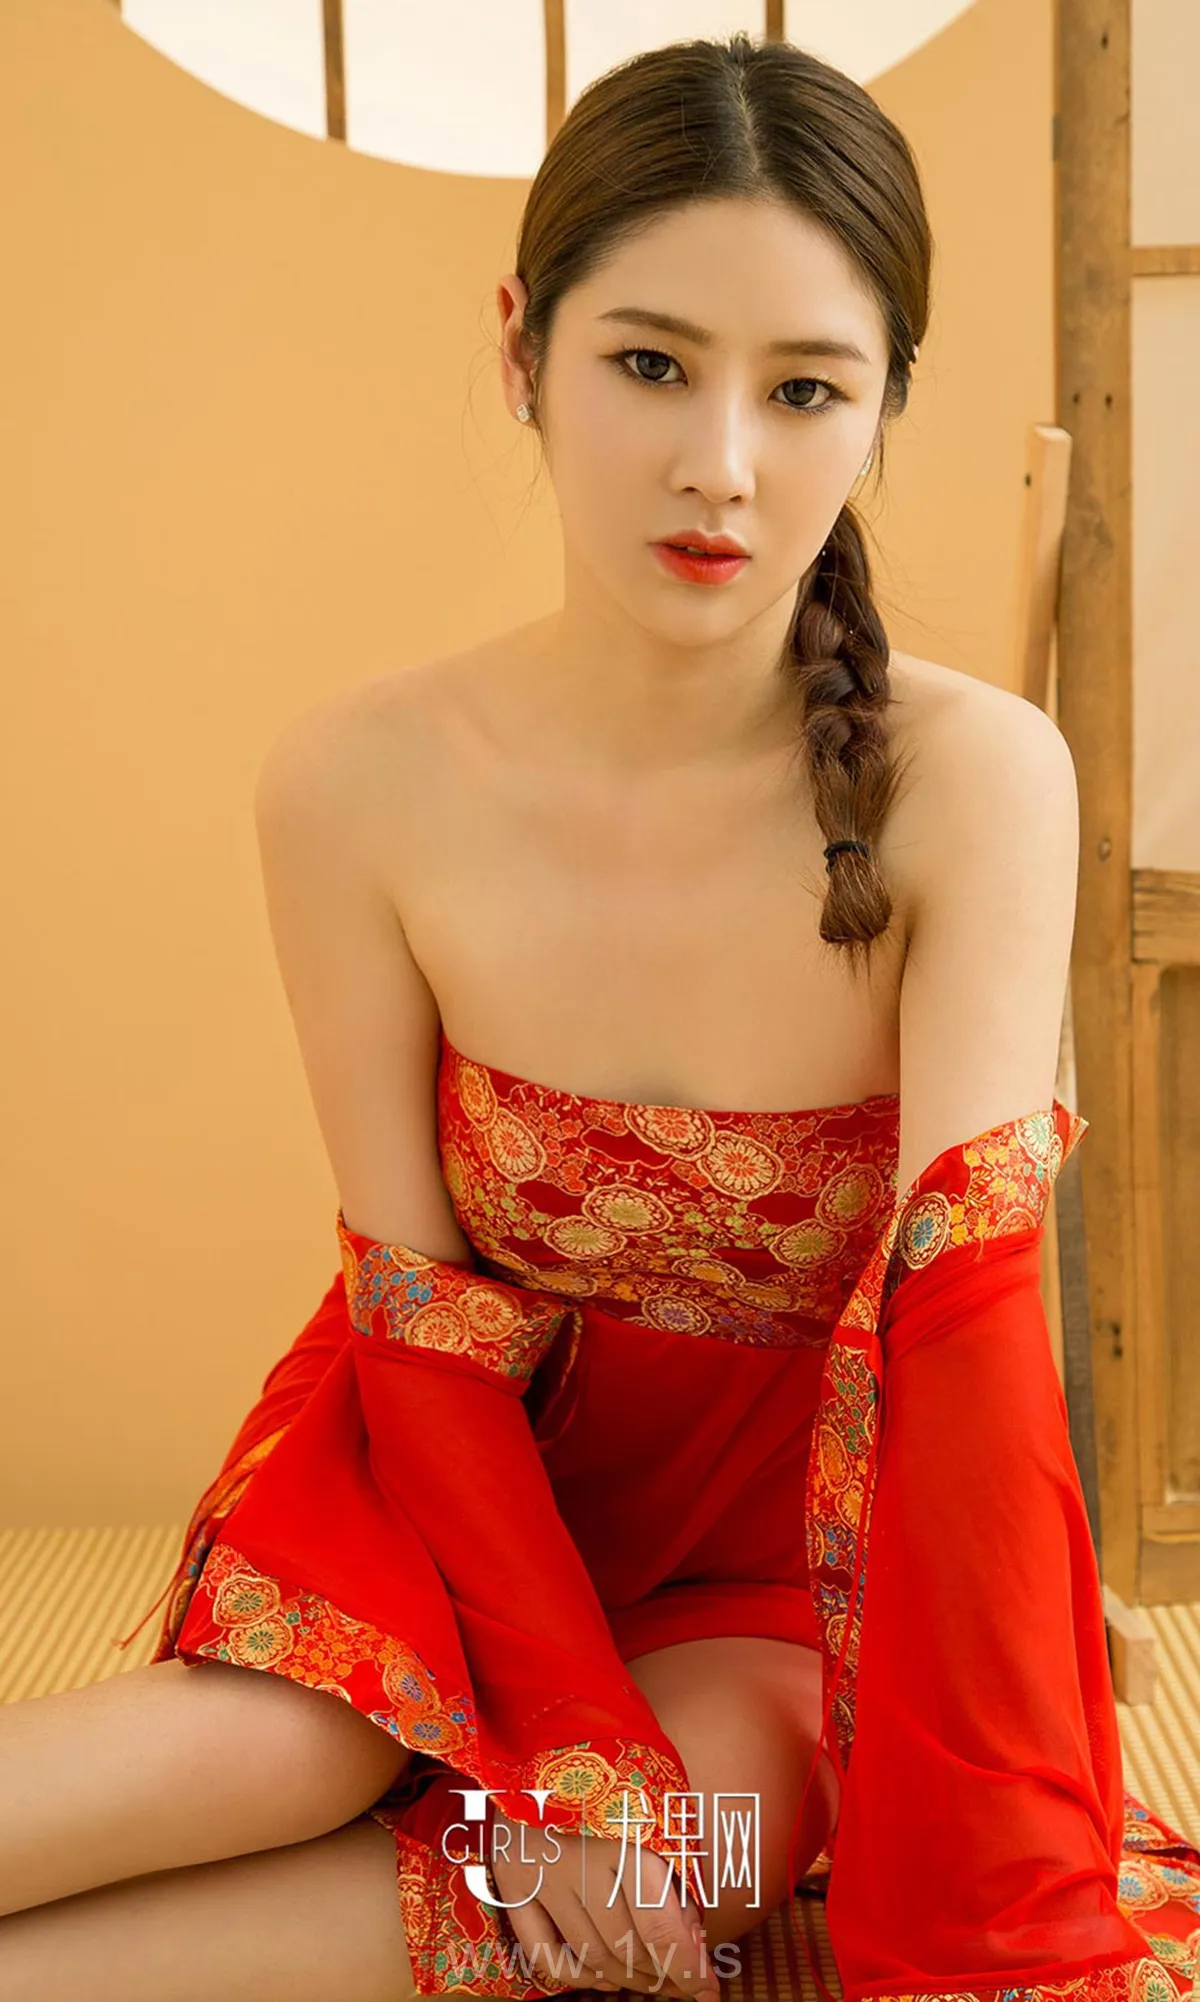 UGIRLS NO.637 Elegant Chinese Beauty 果香四溢